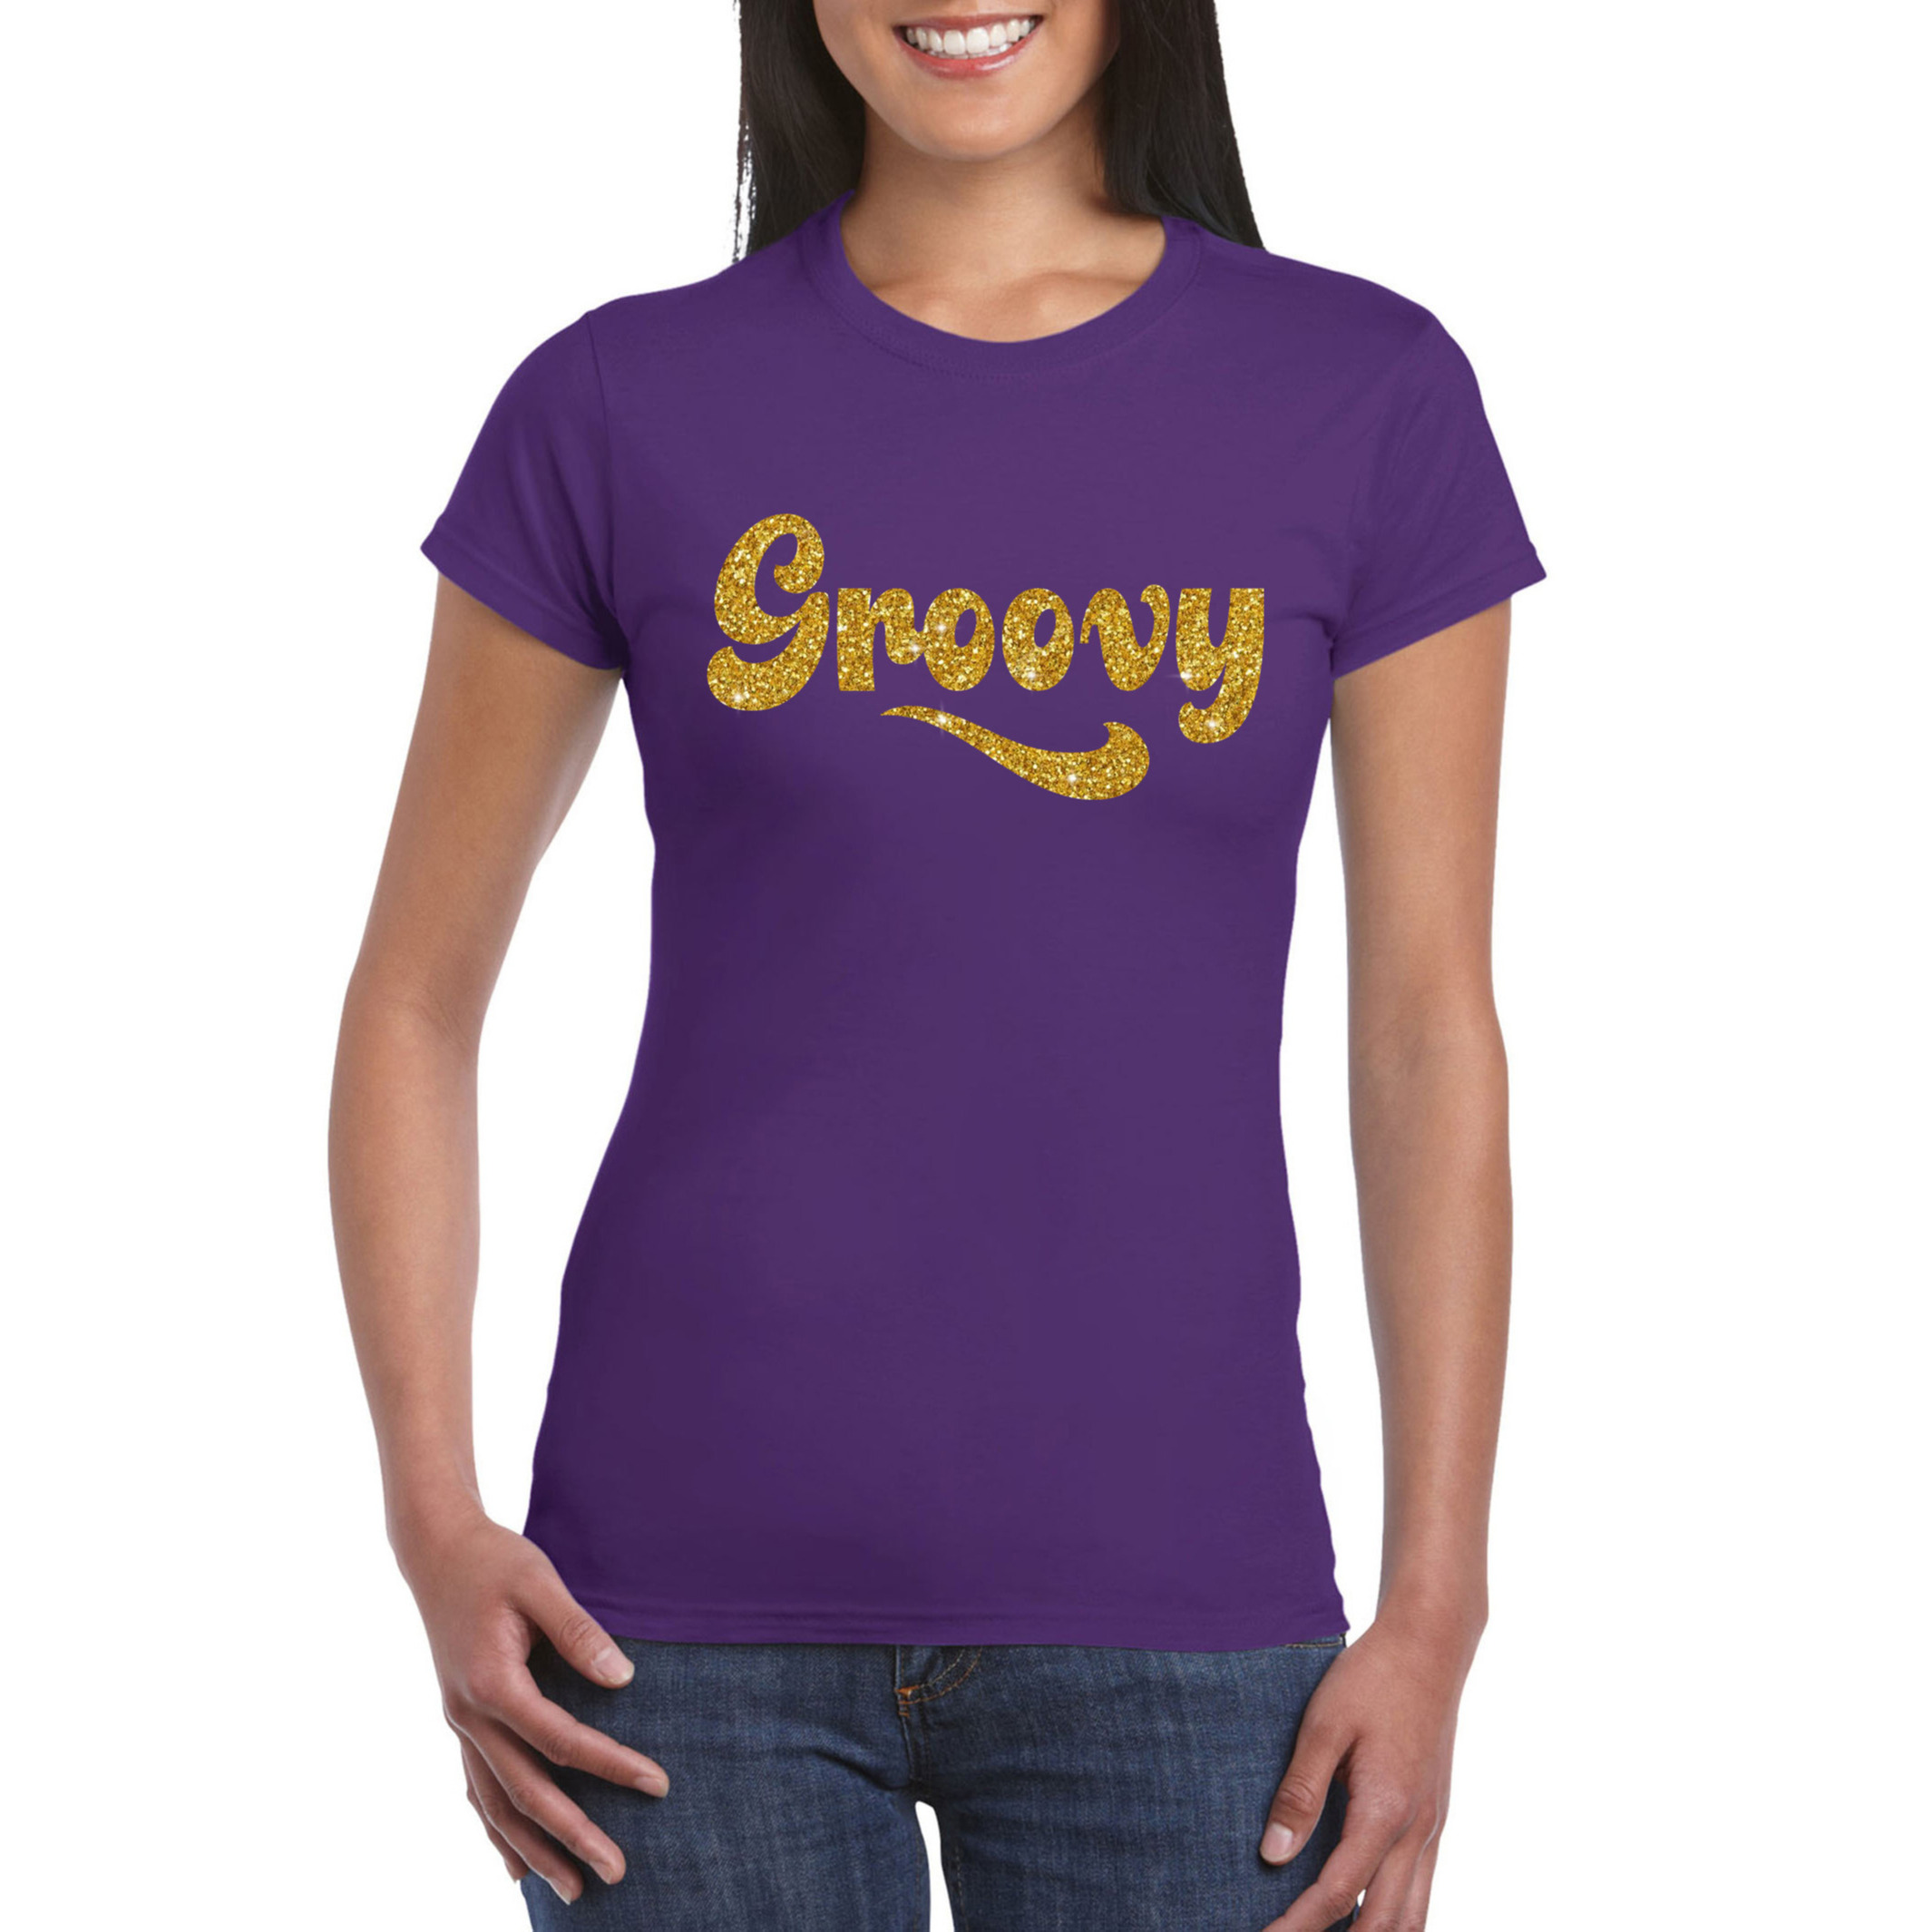 Toppers - Paars Flower Power t-shirt Groovy met gouden letters dames - 1